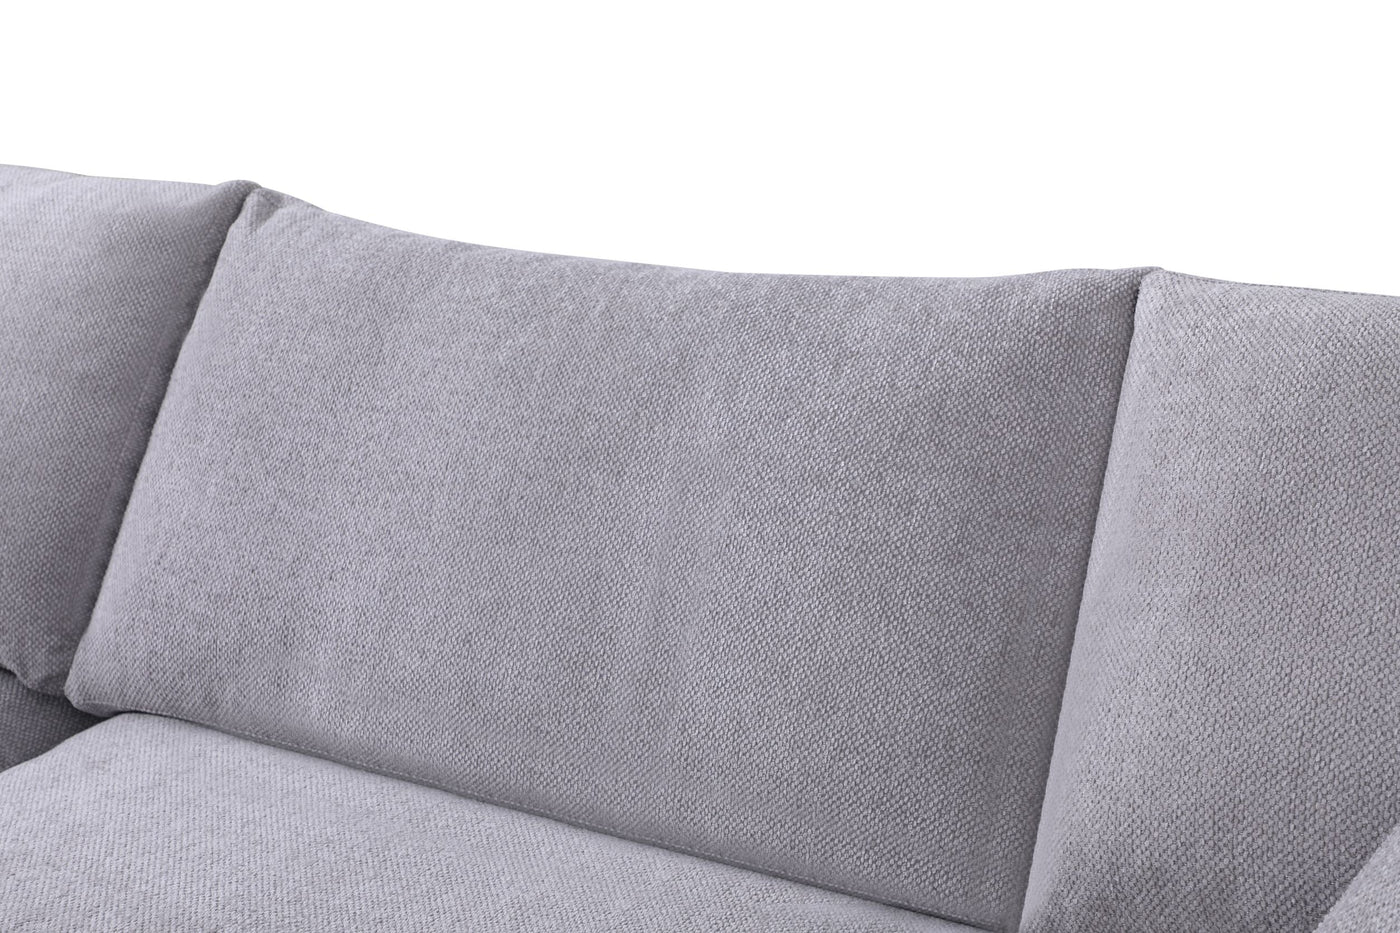 Cloud Sofa - Retro Modern Designs